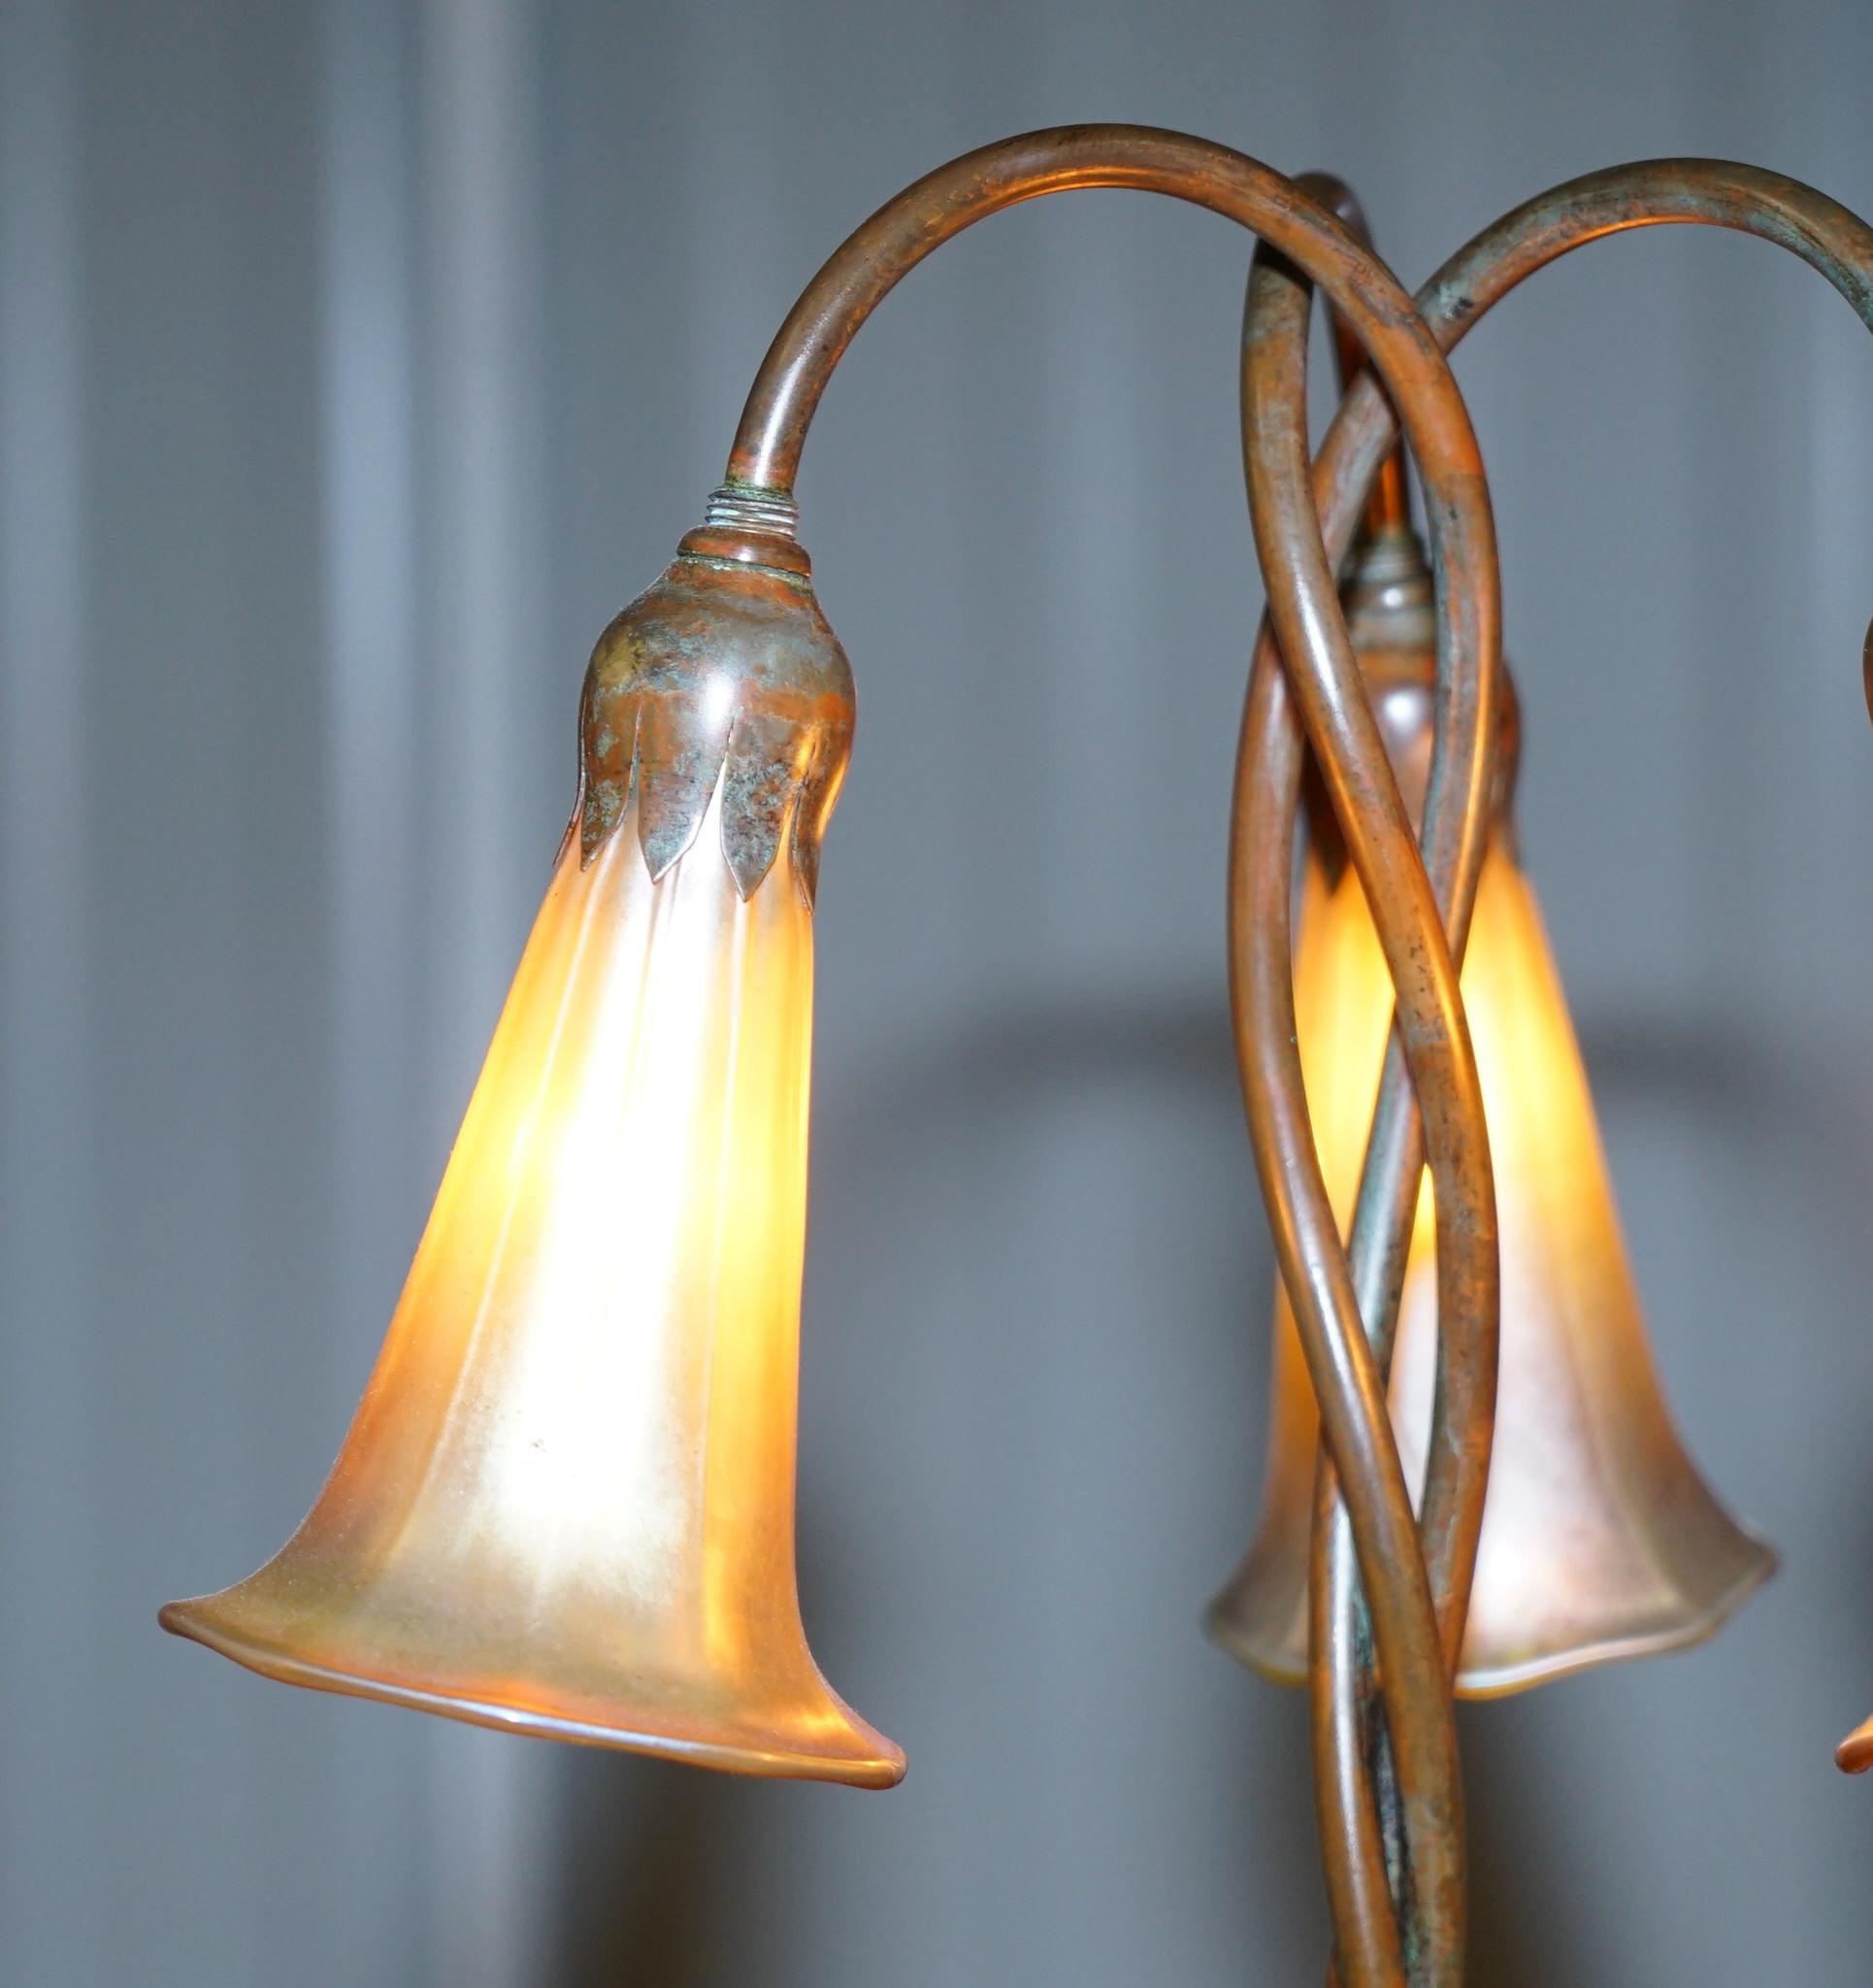 Edwardian Rare Pair of Original Tiffany Studios Lamps Favrile Glass Shades Solid Bronze